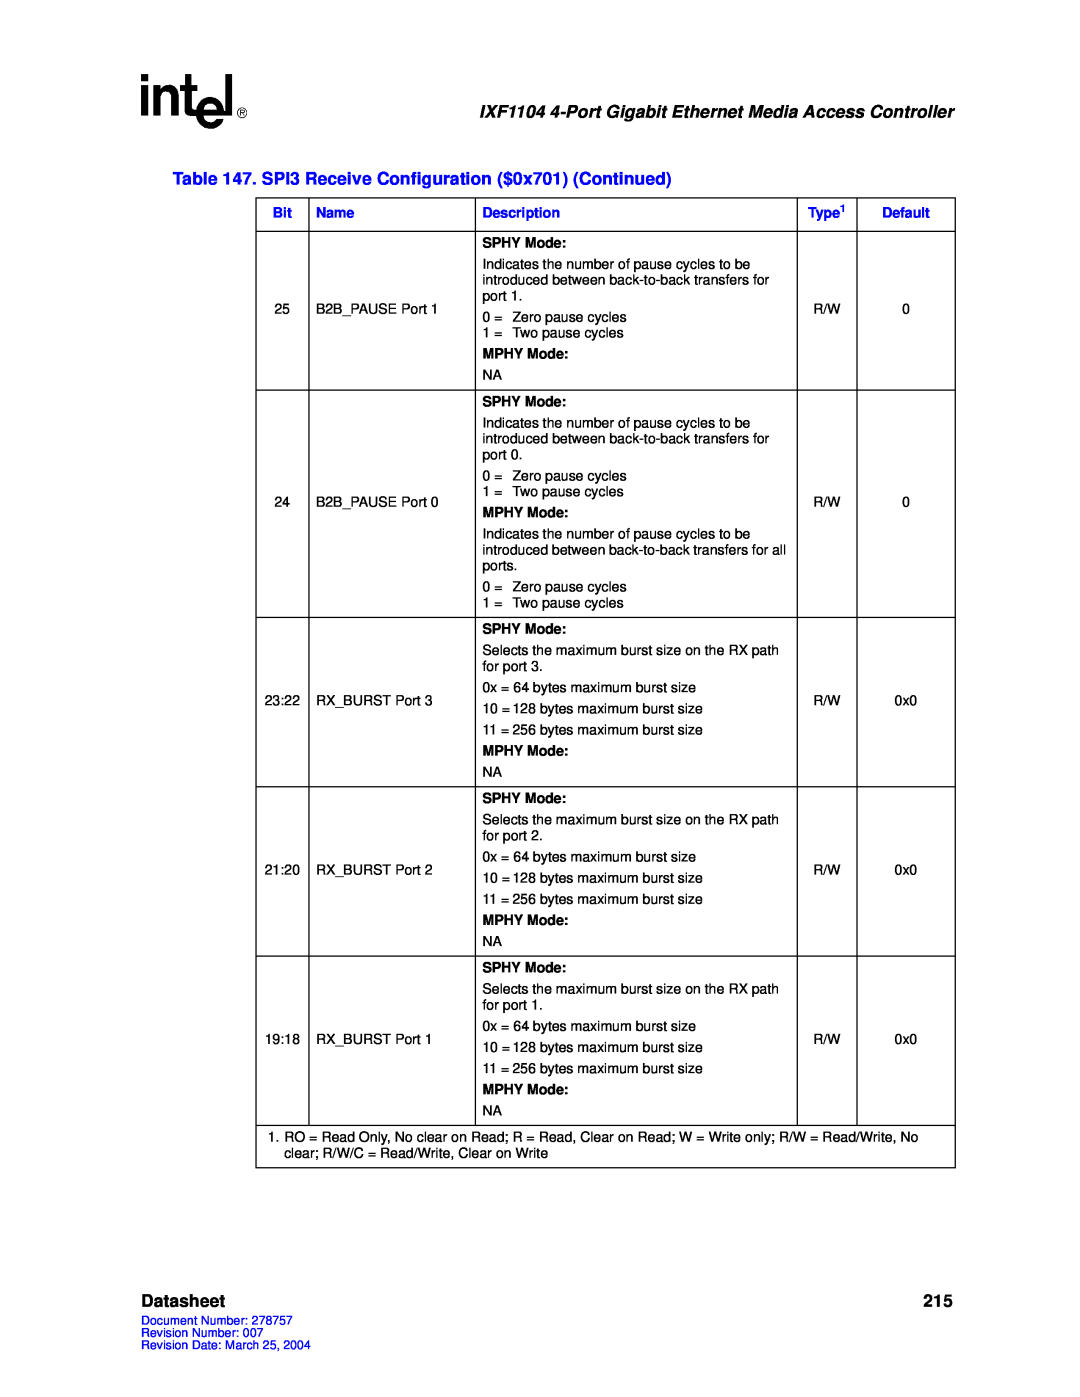 Intel IXF1104 manual Datasheet, SPHY Mode, MPHY Mode 